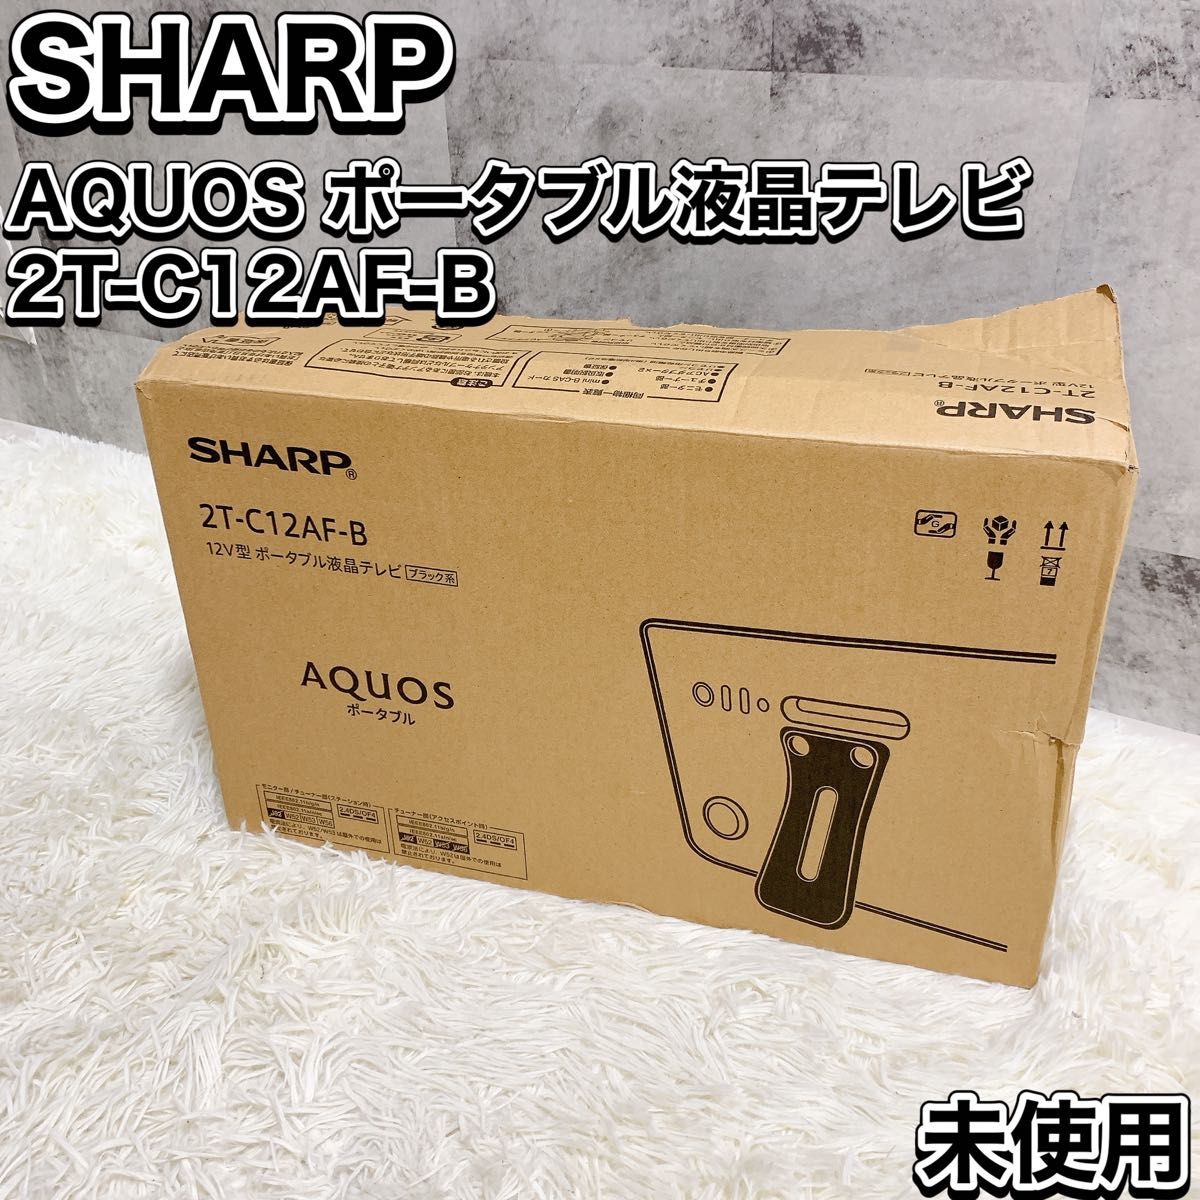 SHARP シャープ AQUOS ポータブル液晶テレビ ハイビジョン 防水 ワイヤレス ブラック 12V型 2T-C12AF-B